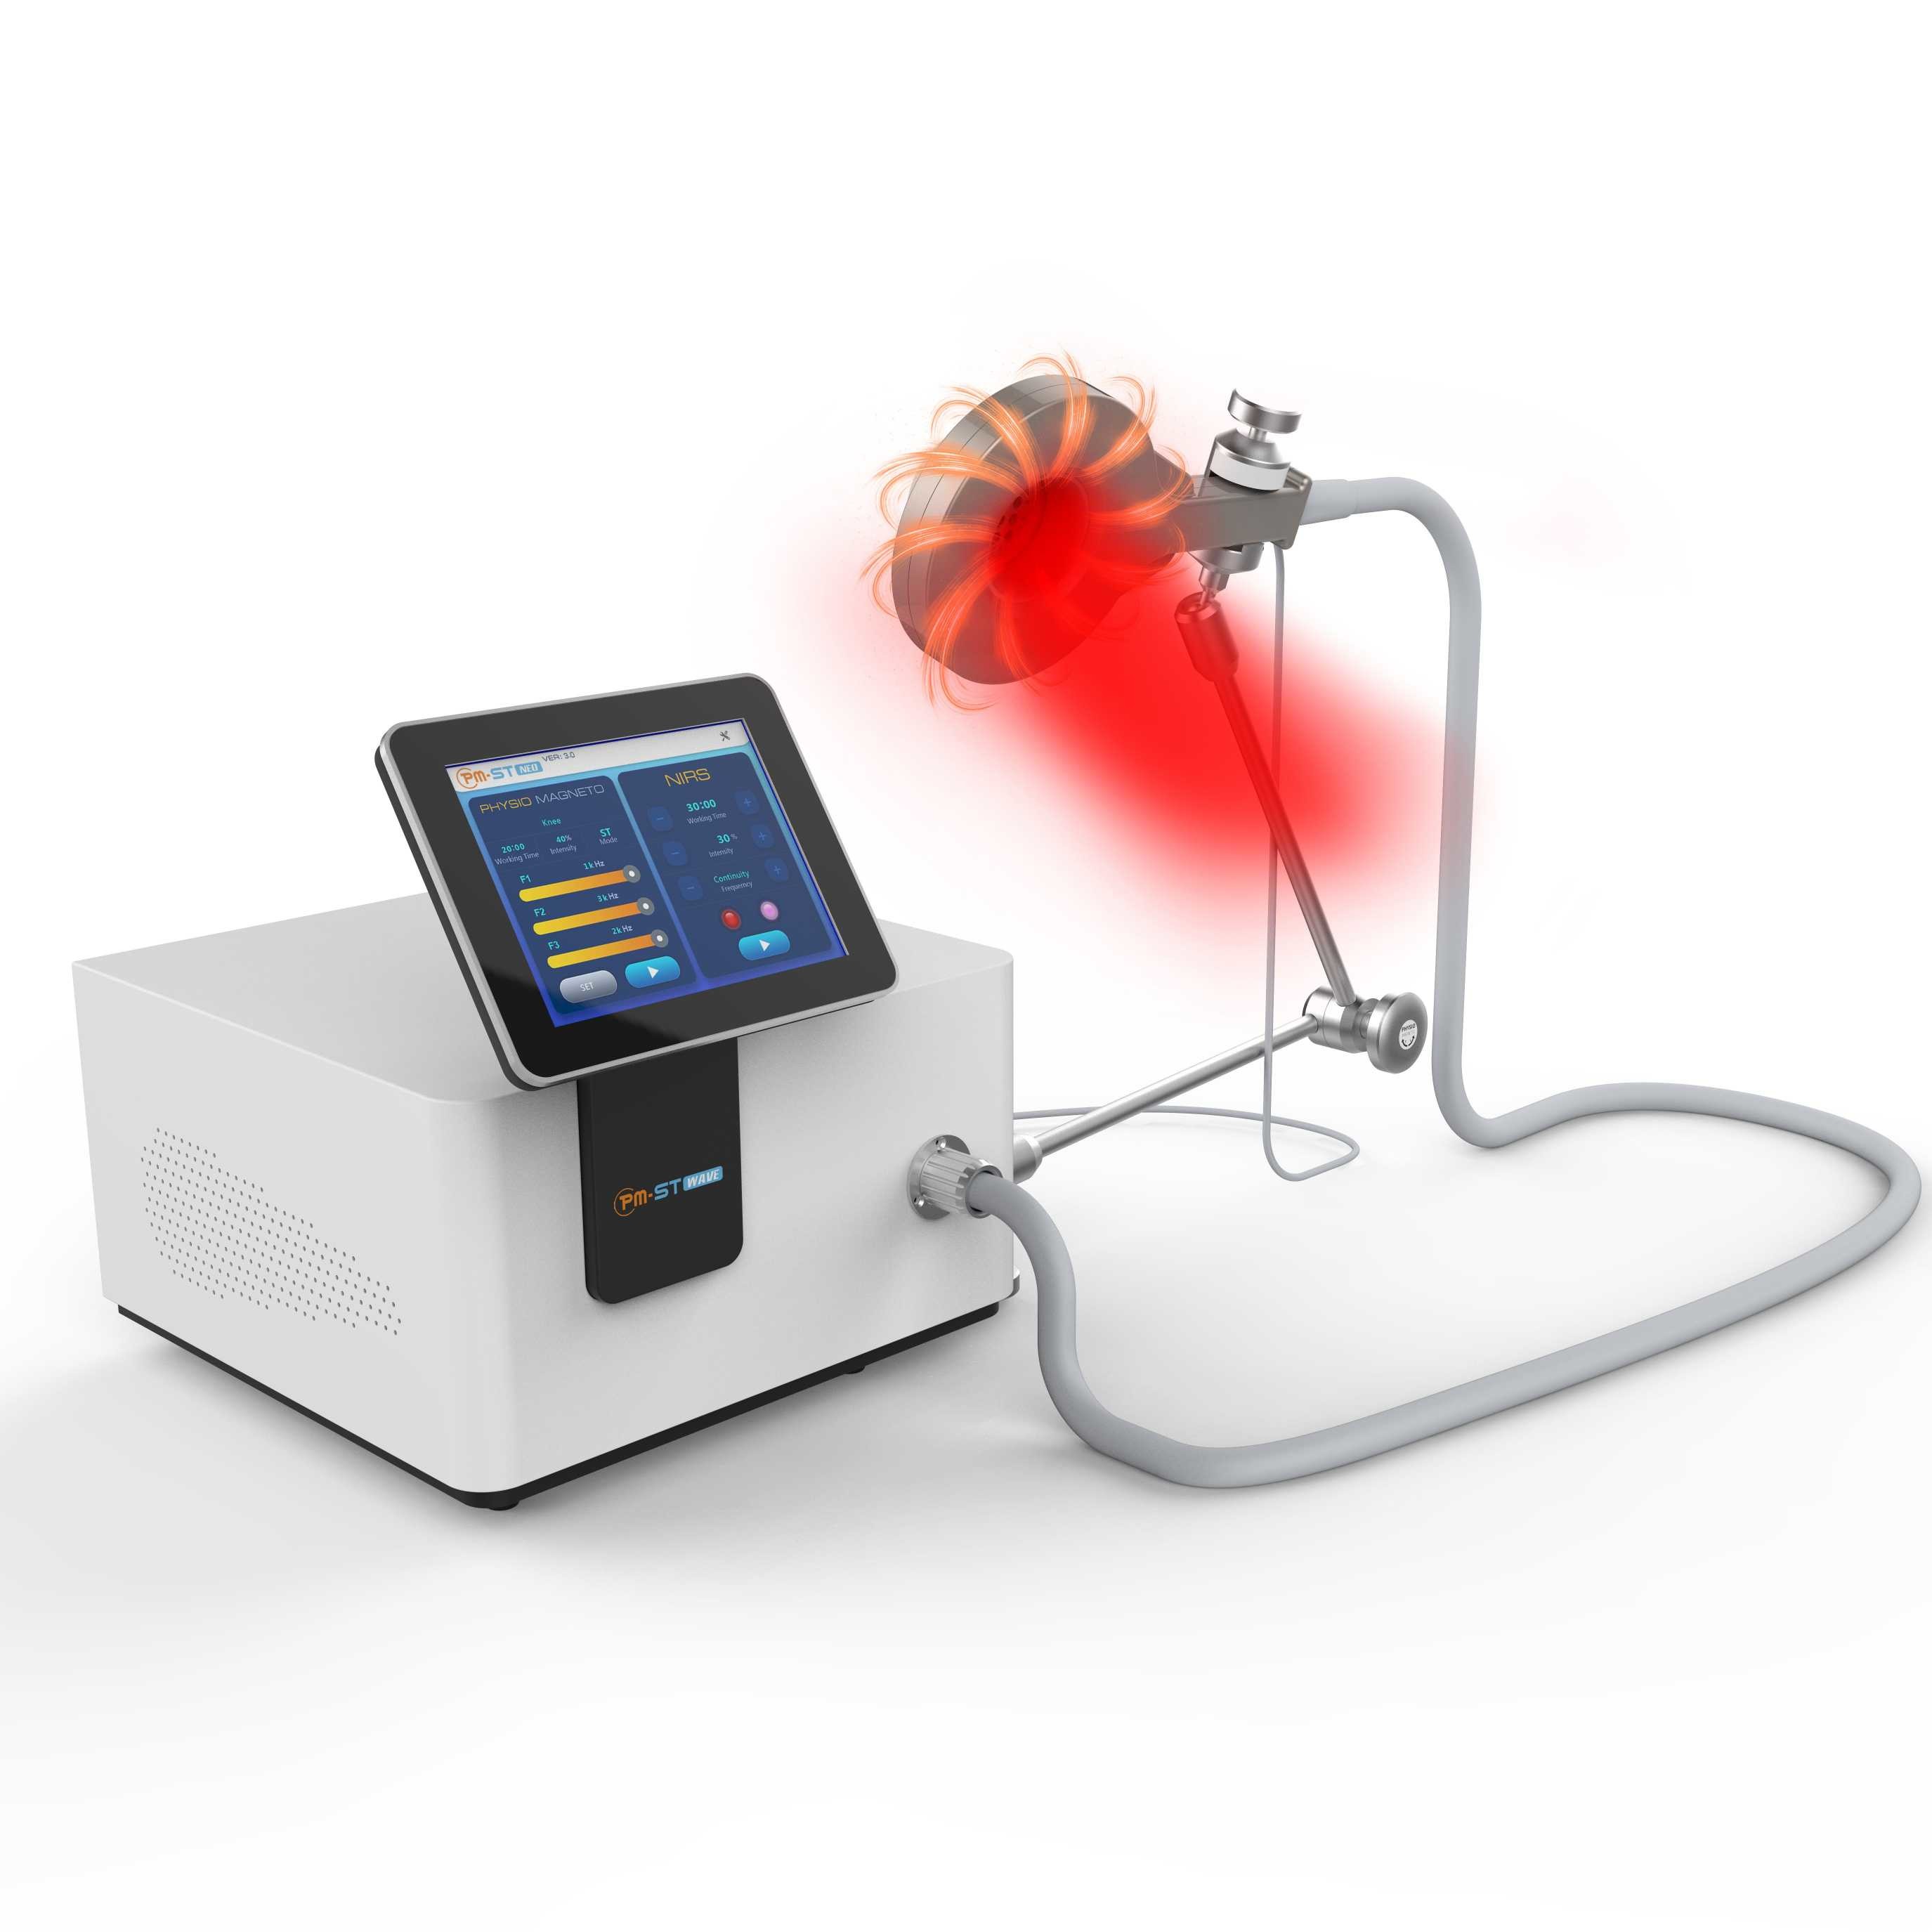 130 khz 물리 마그네토 요법 기계는 혈액 산소를 위한 추운 적신호 물리치료 장치에 근접시킵니다